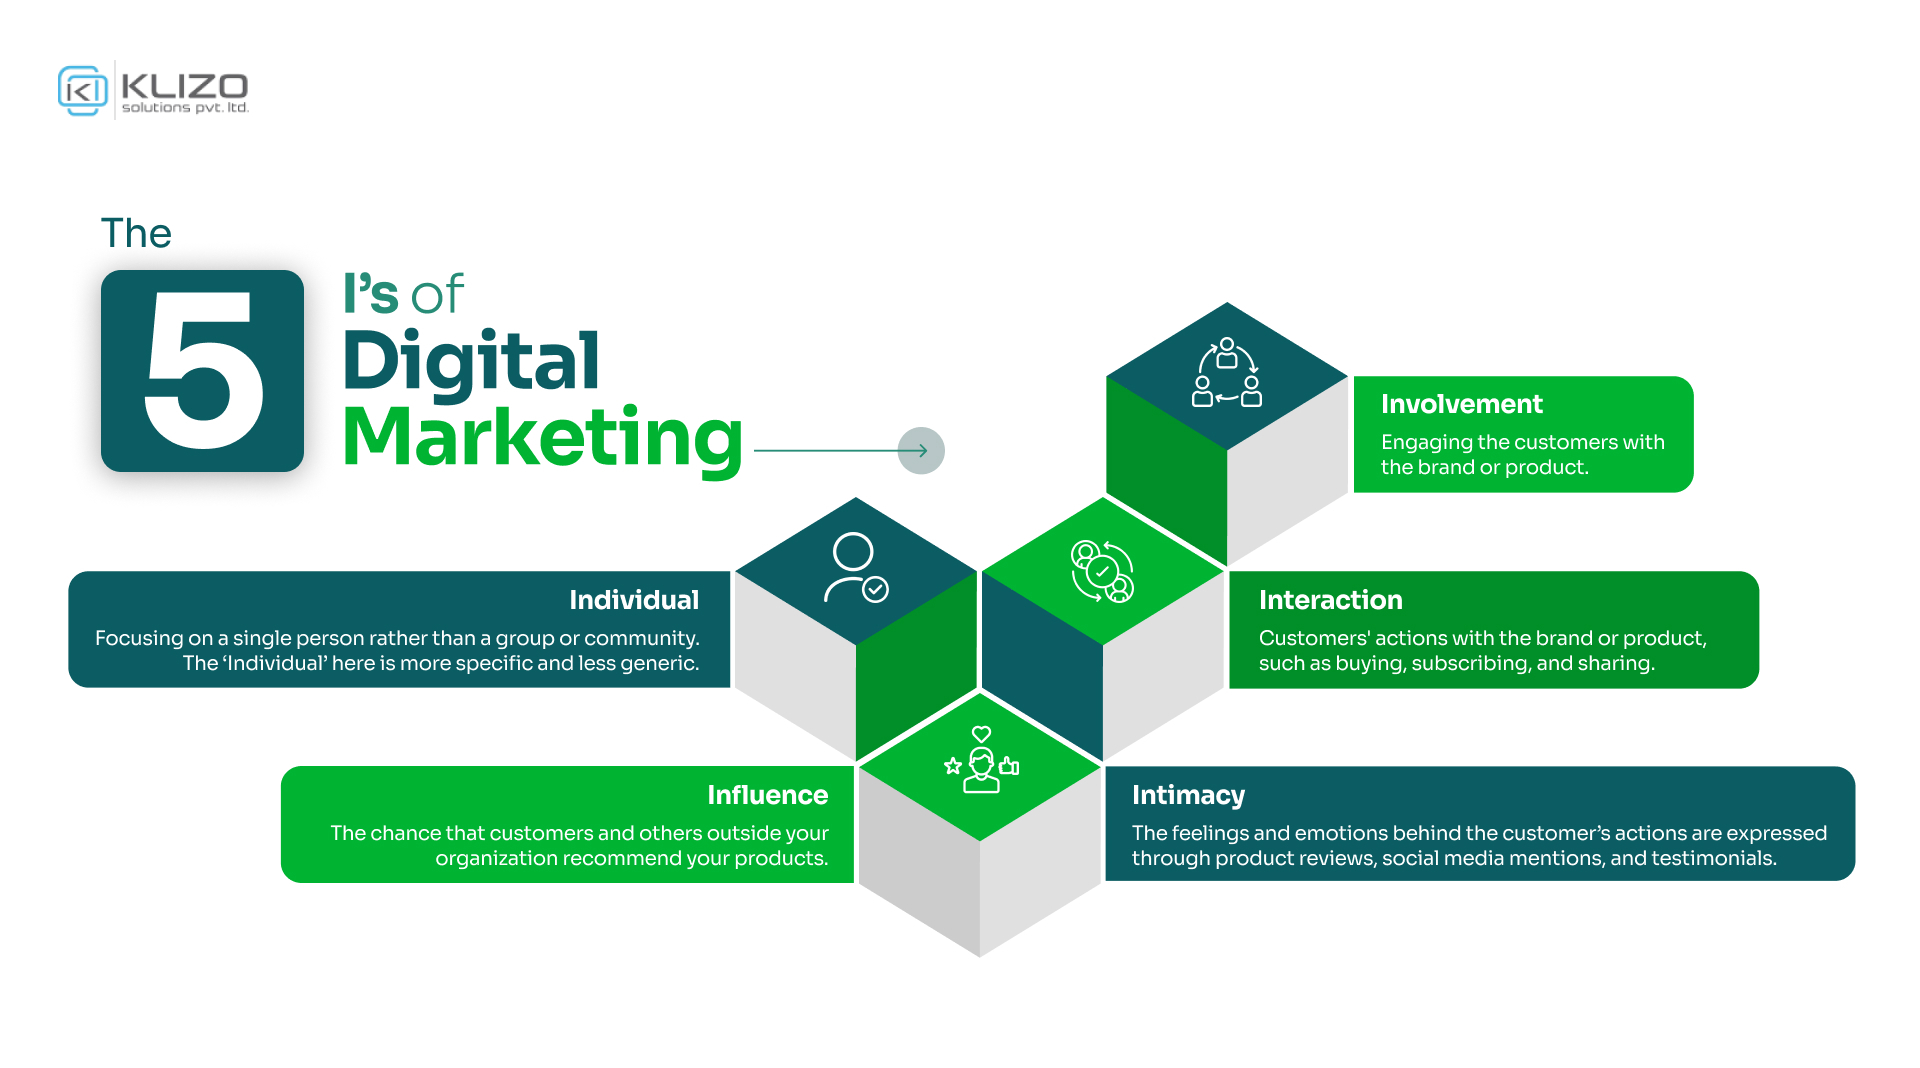 The Five I’s of Digital Marketing